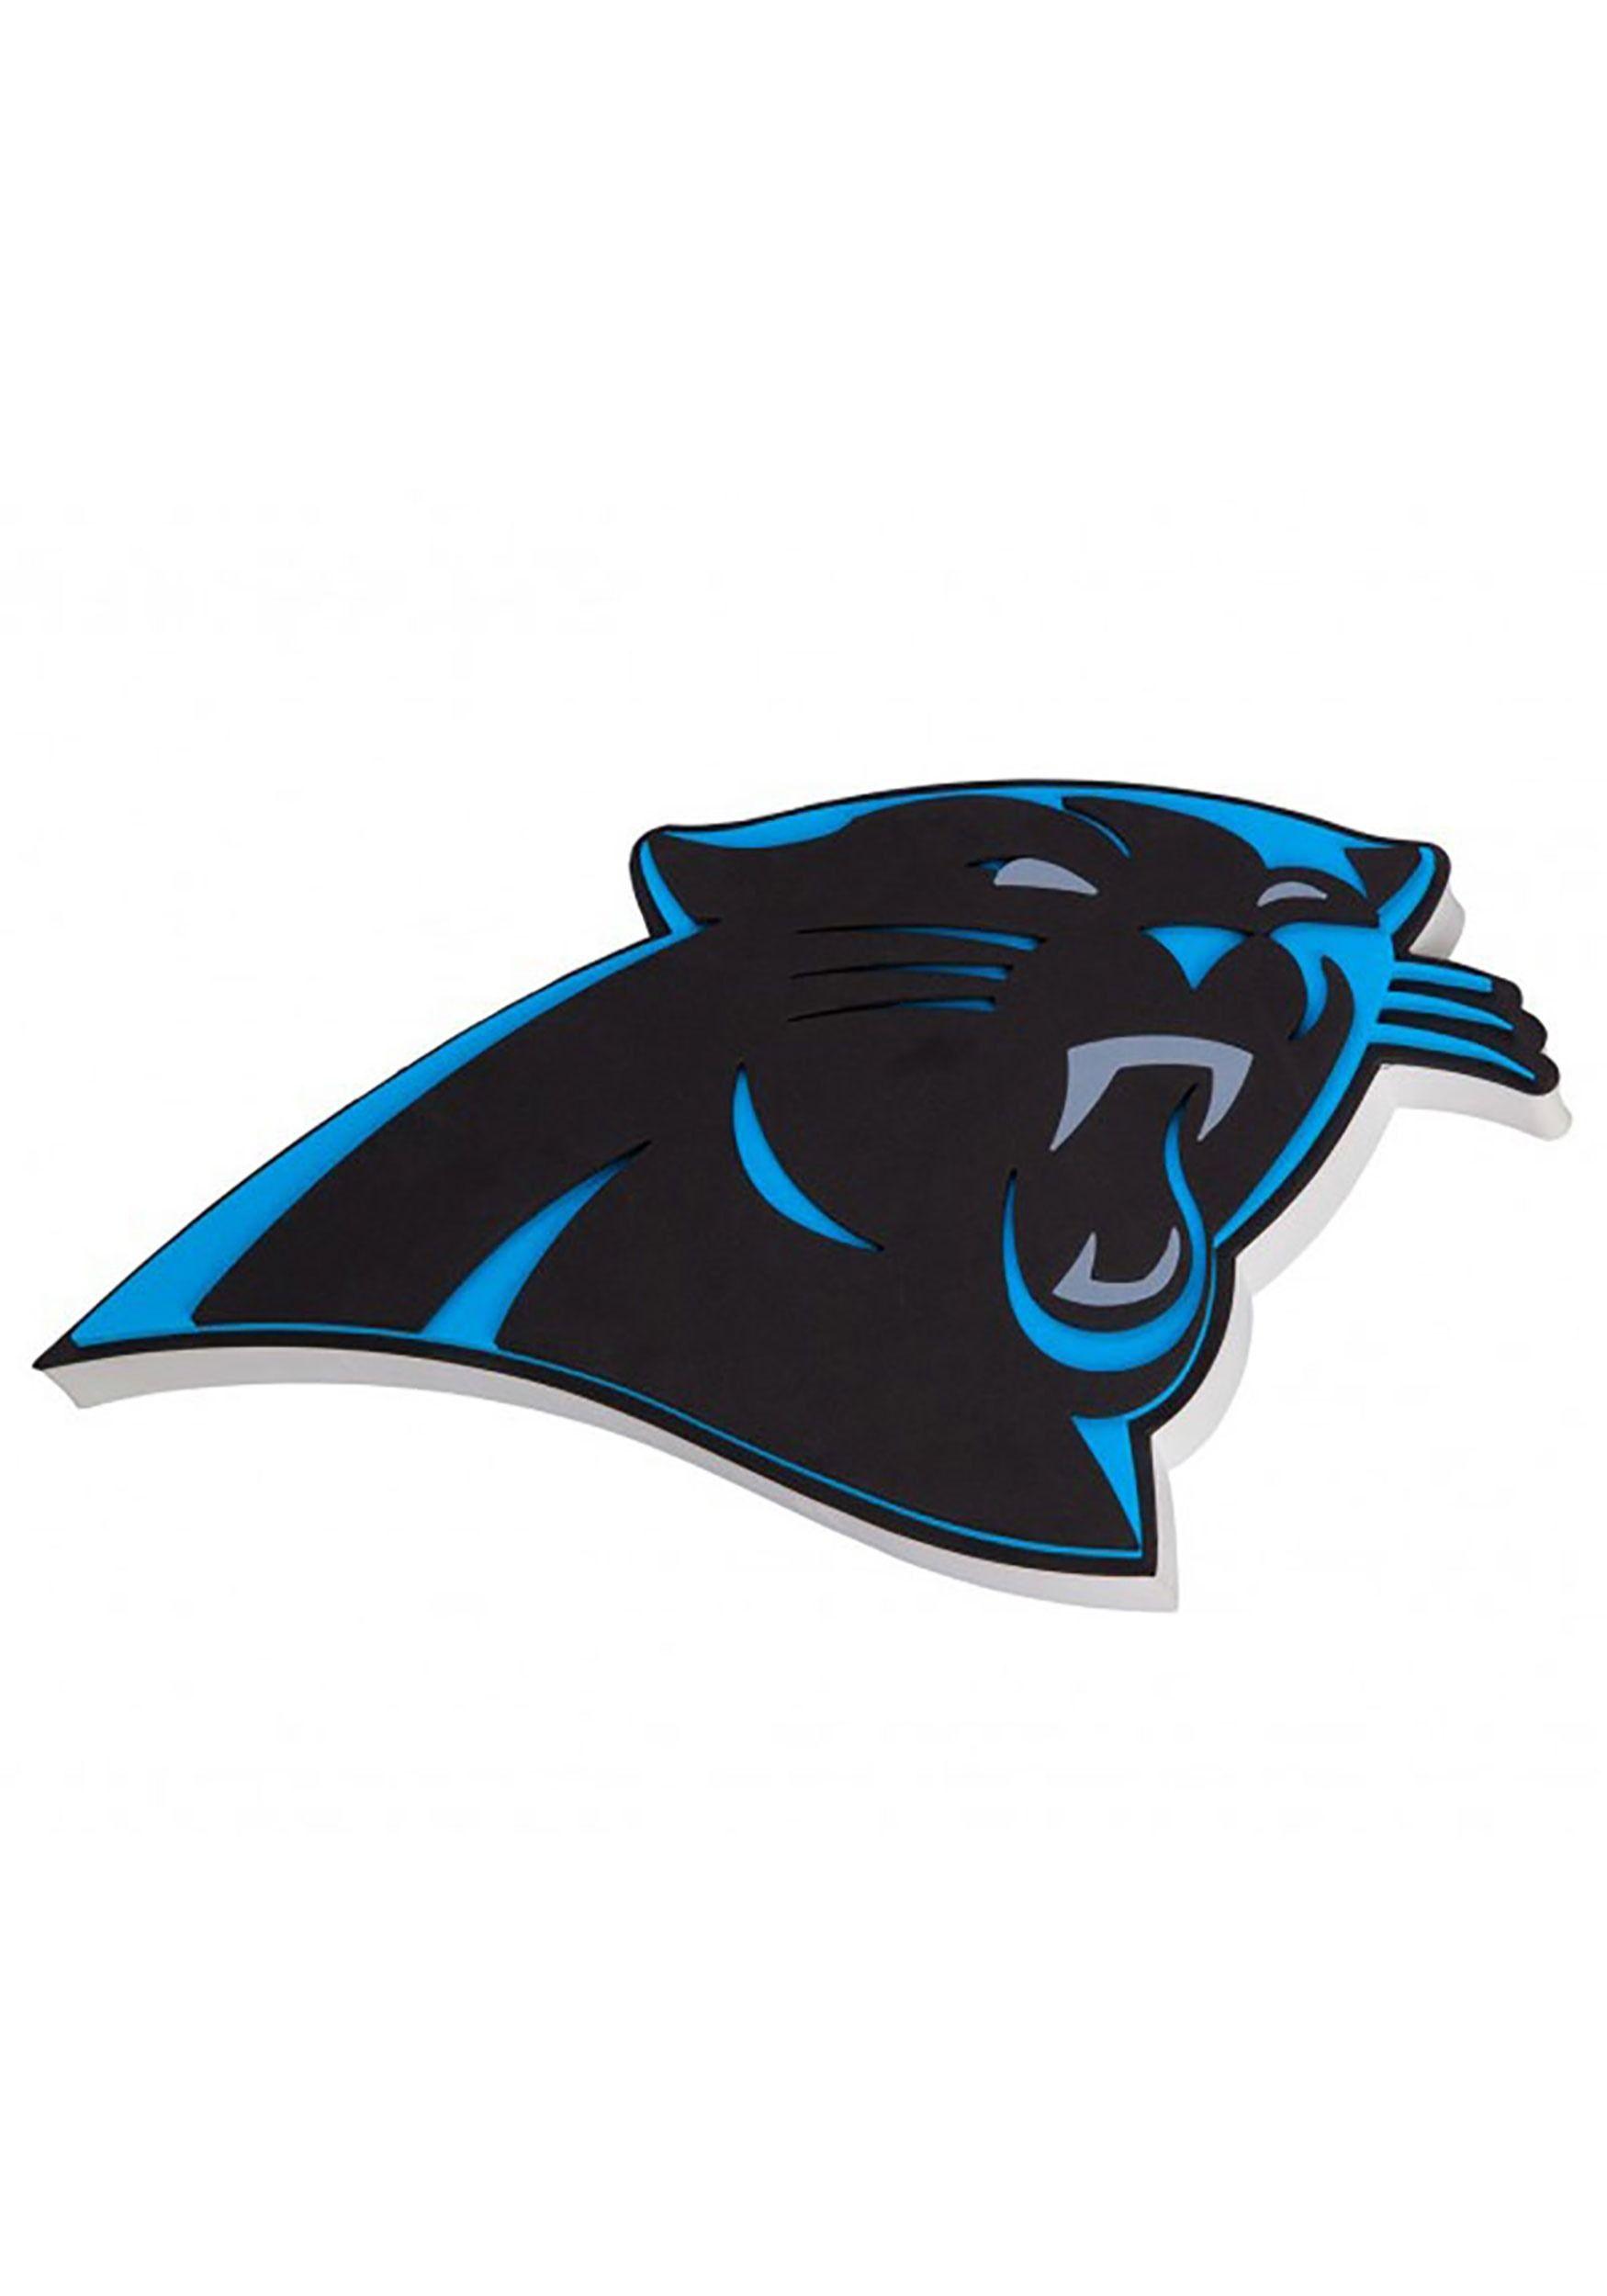 Panthers Logo - Carolina Panthers NFL Logo Foam Sign